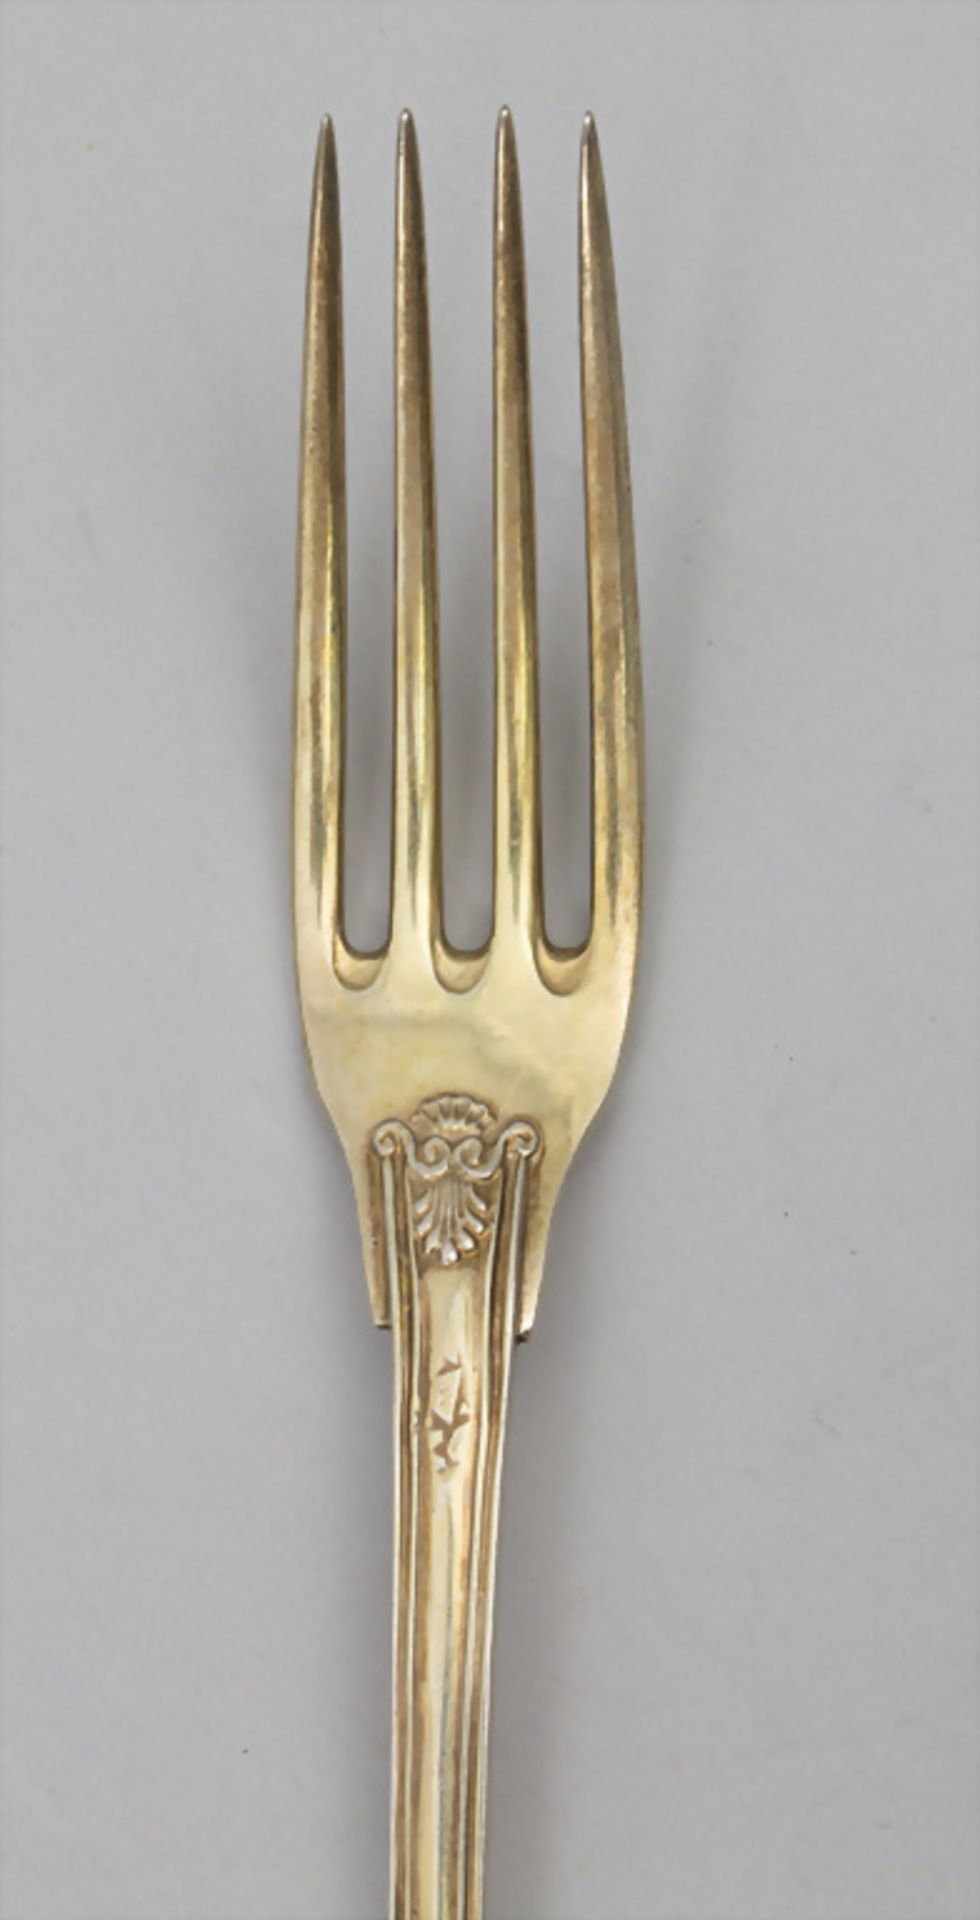 36 tlg. Silberbesteck / A 36-piece set of silver cutlery, Charles Salomon Mahler, Paris, 1824-1833 - Bild 8 aus 15